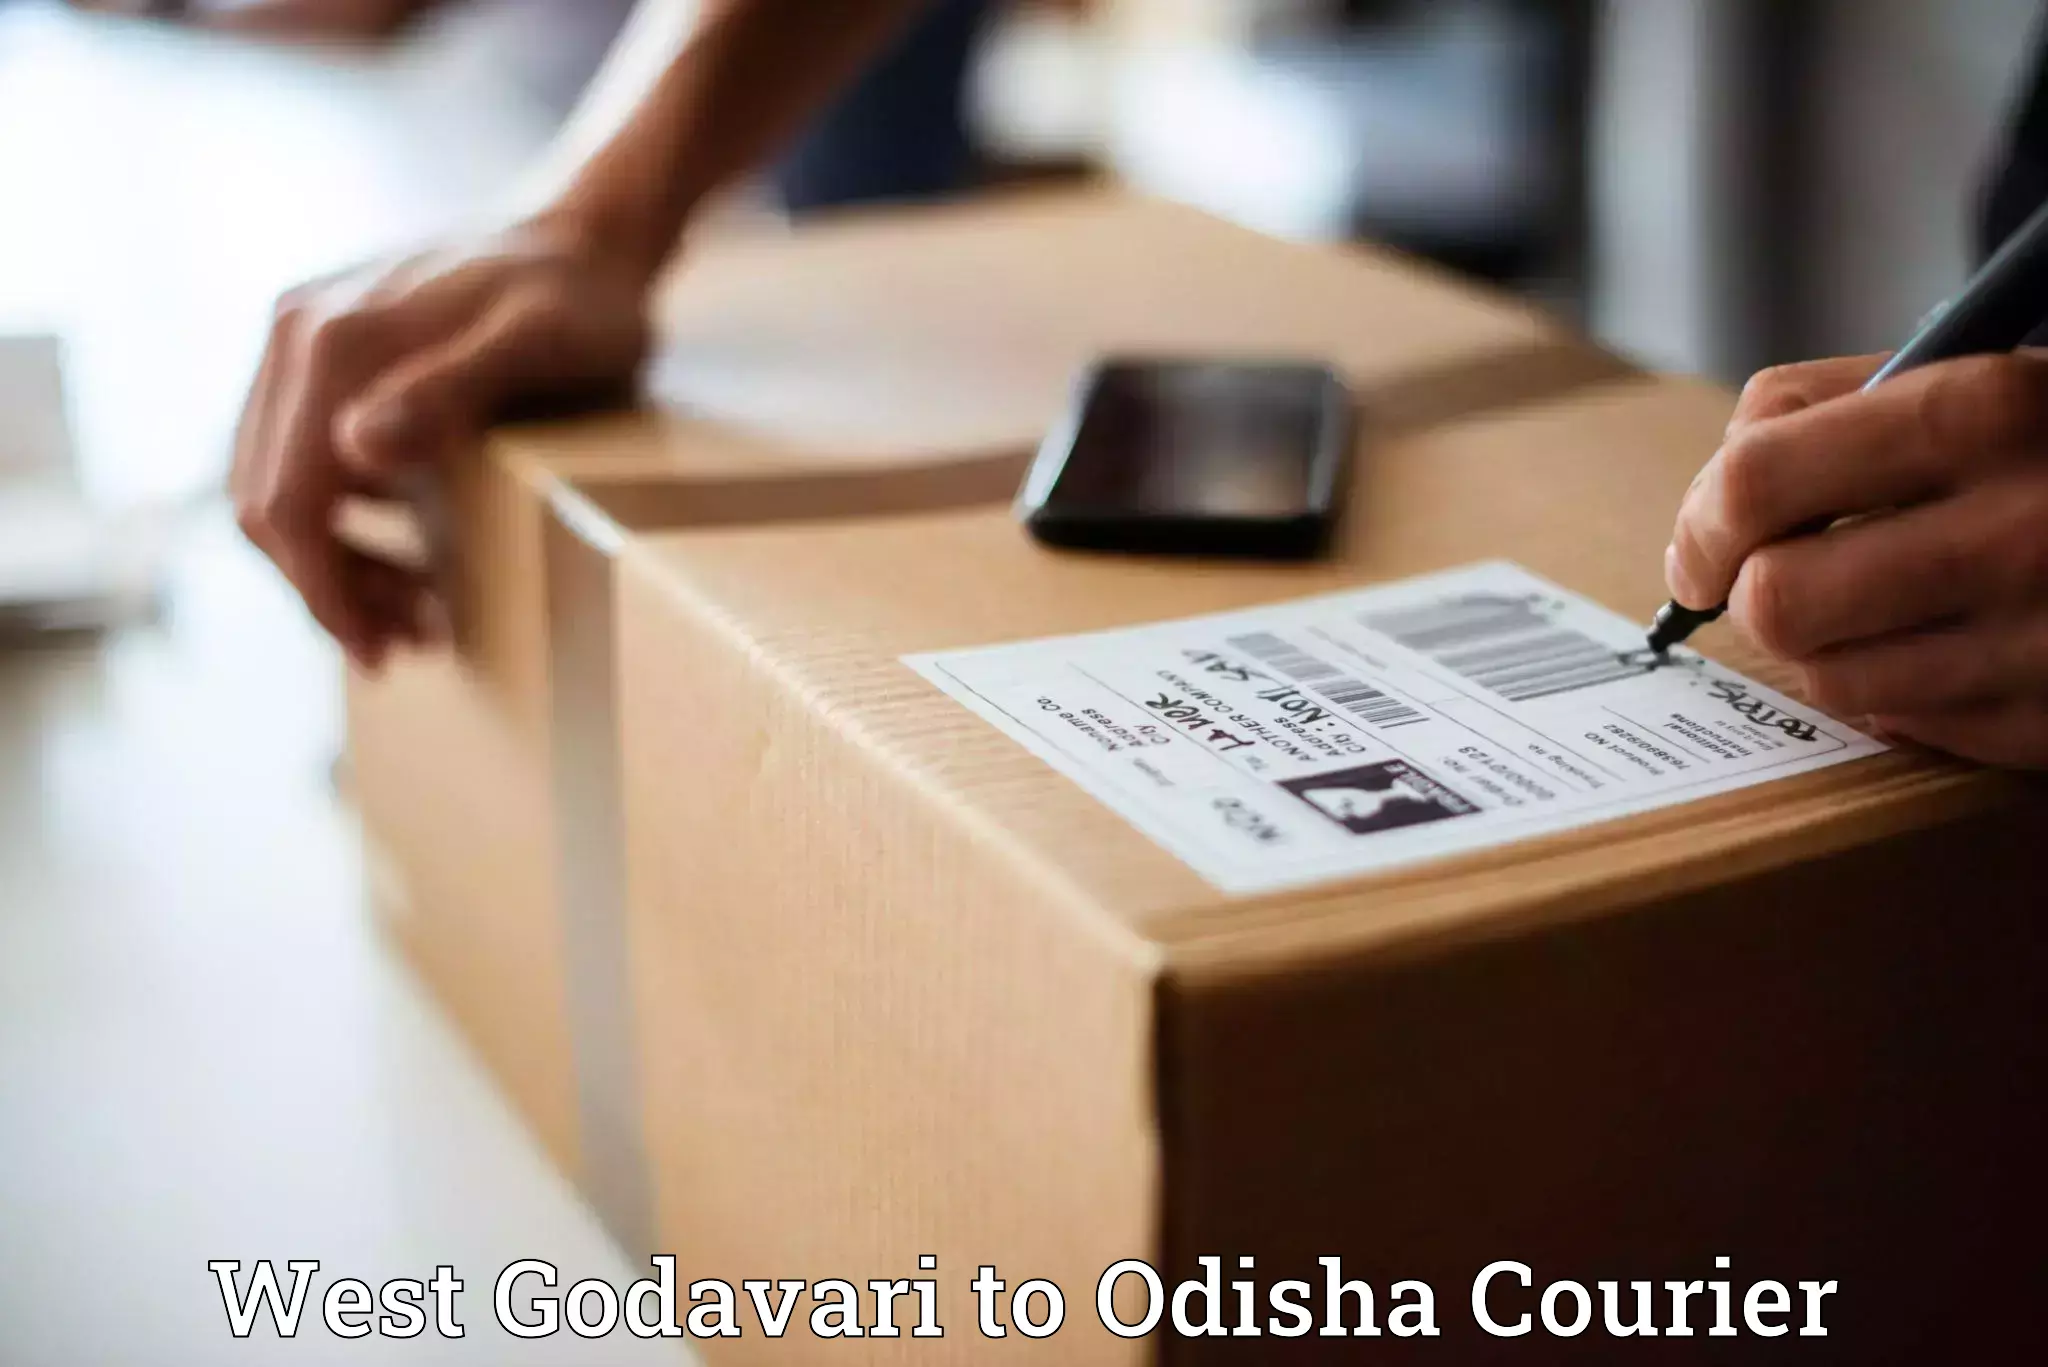 Courier service efficiency West Godavari to Jaraka